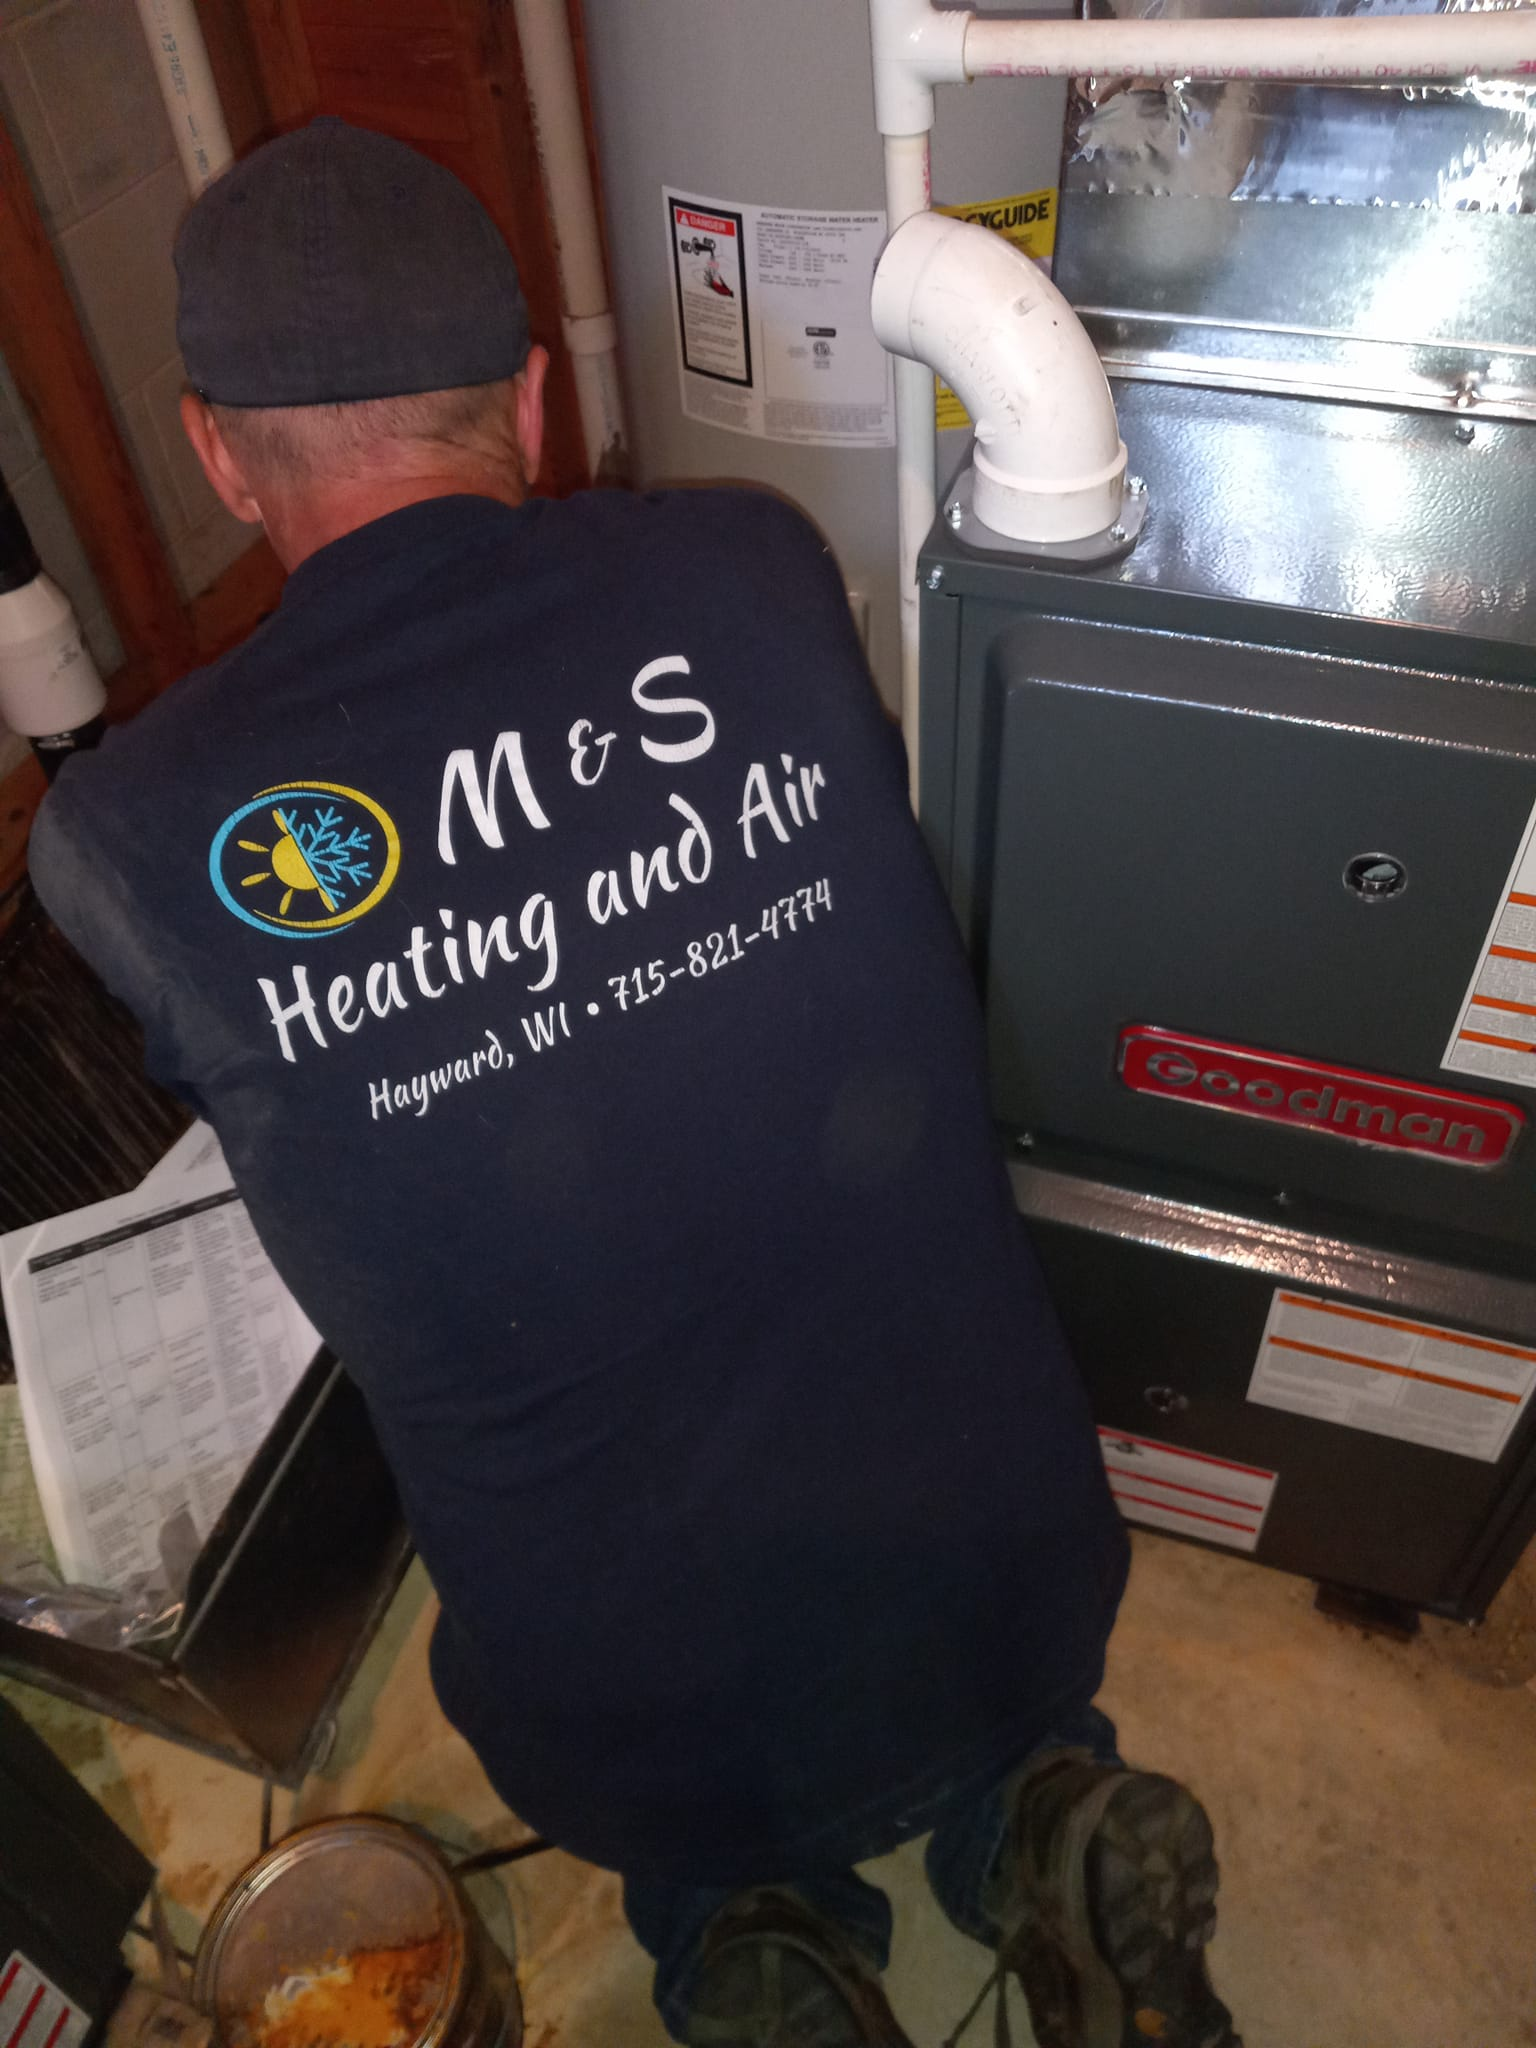 Man Working -Hayward, WI -M & S Heating and Air LLC